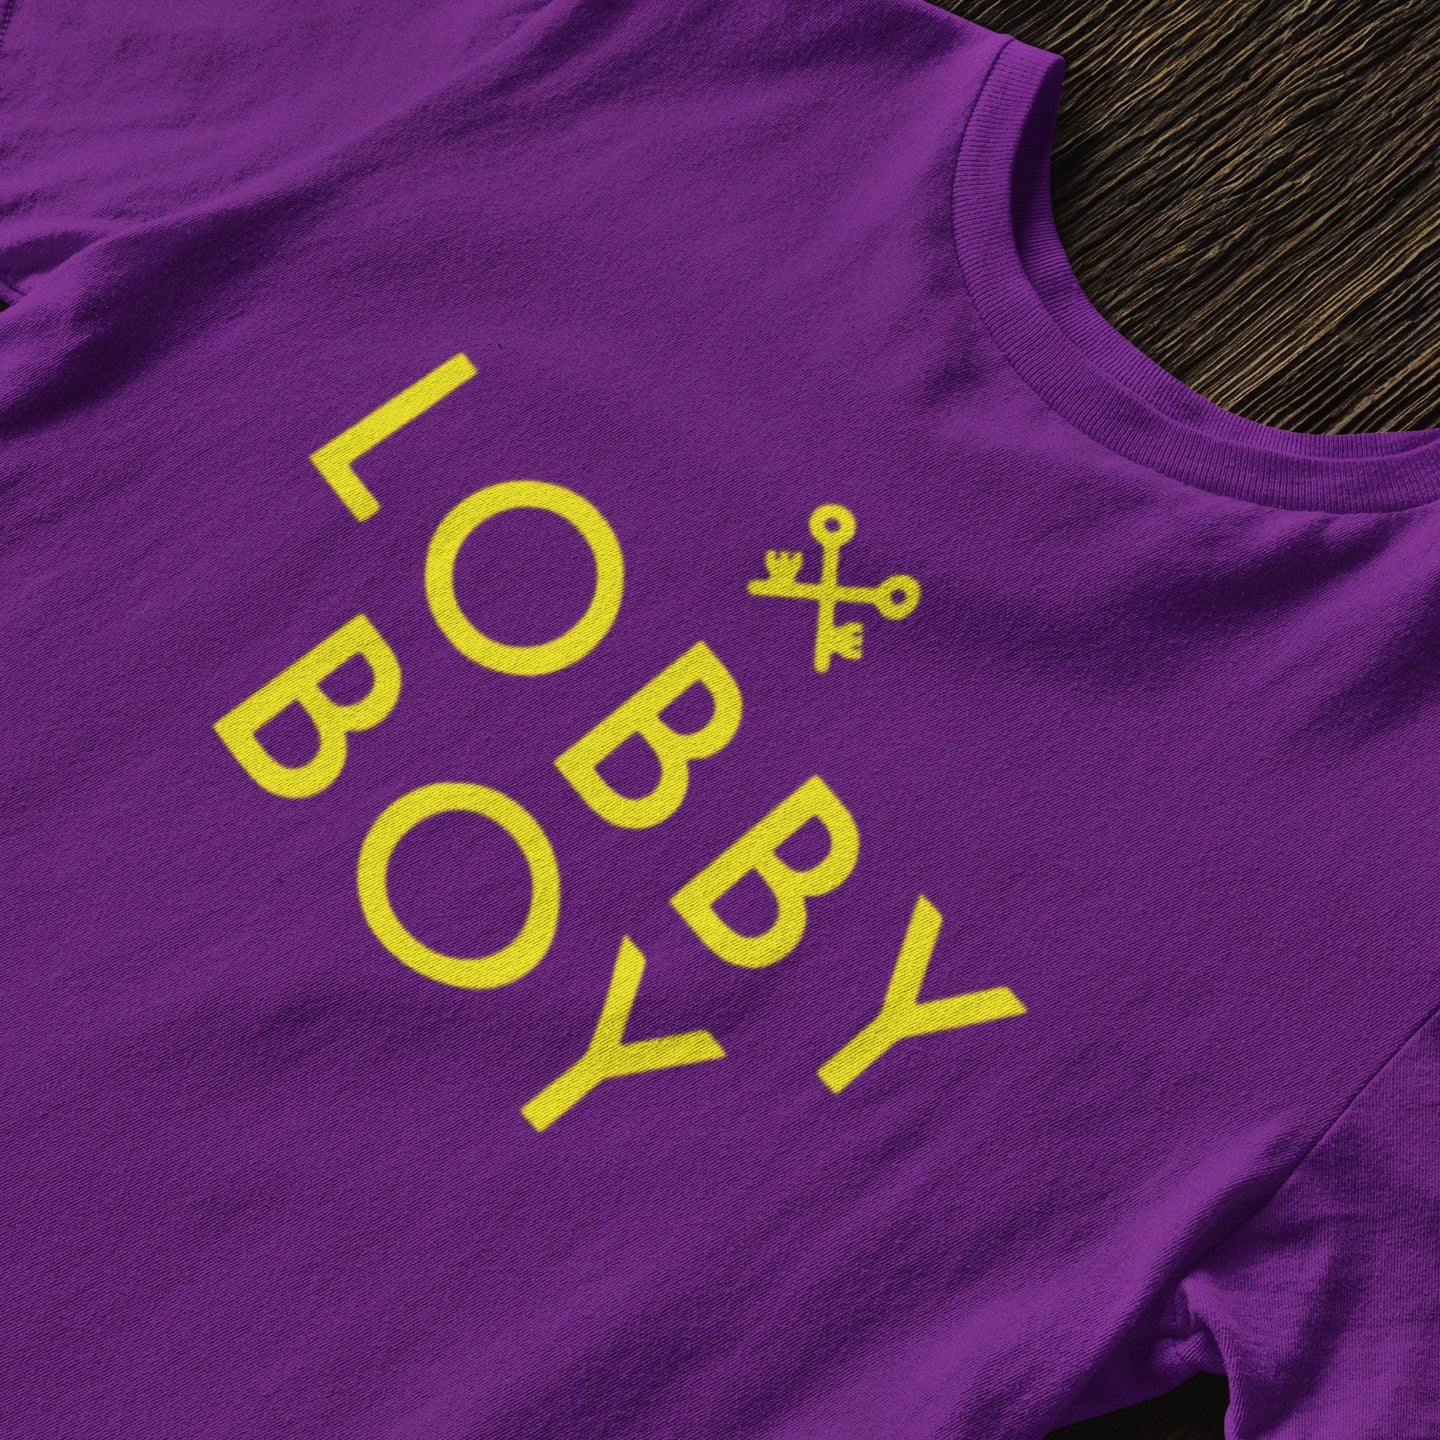 Lobby Boy The Grand Budapest Hotel- T-Shirt